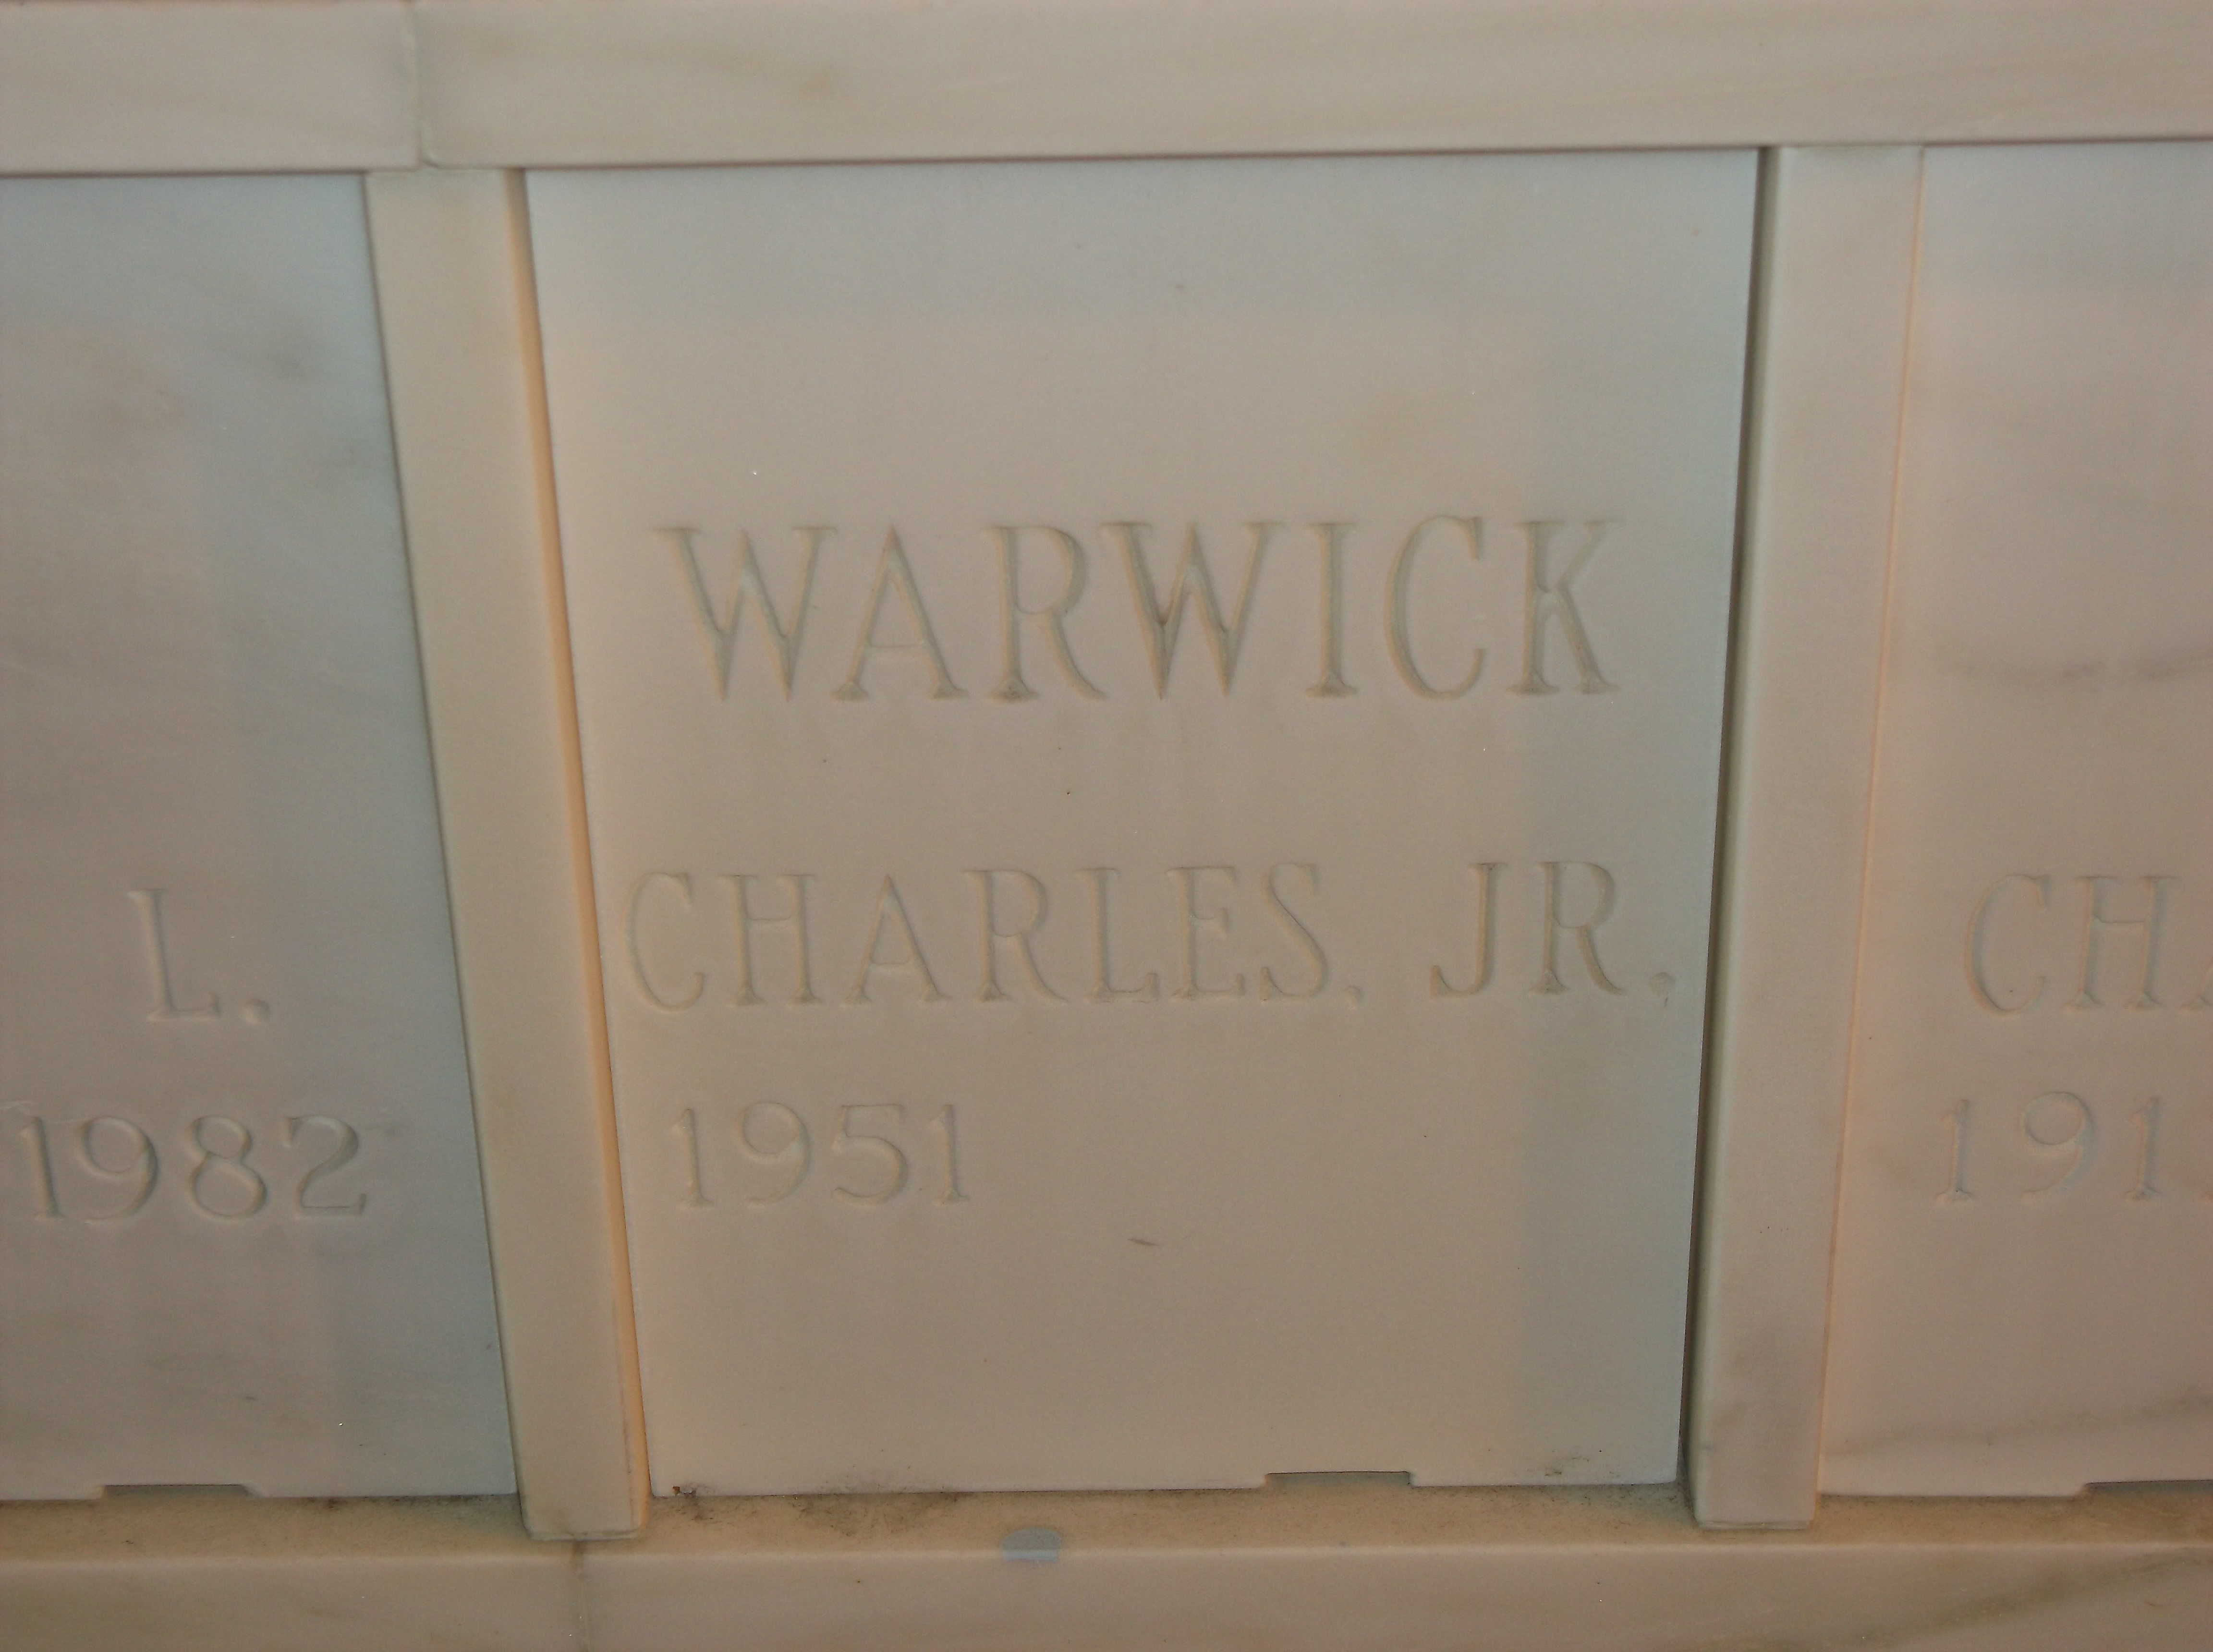 Charles Warwick, Jr